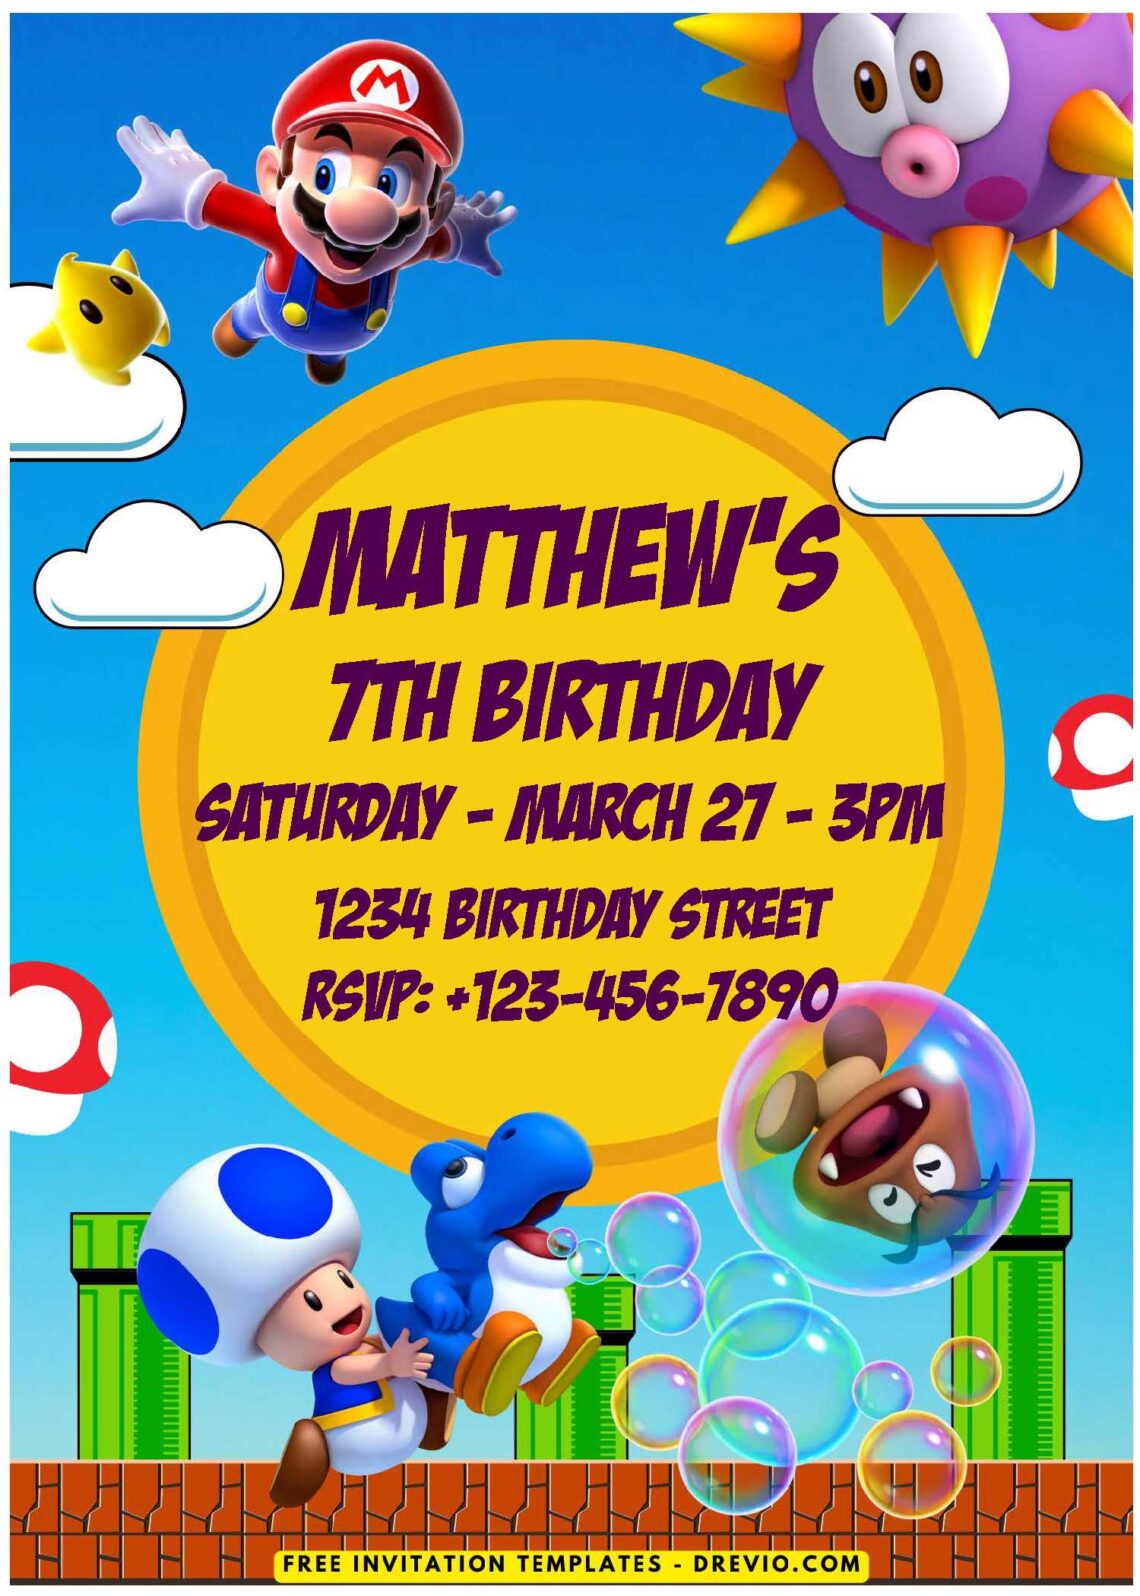 Super Mario Invitation Template Guide: Free Designs For Your Party! F